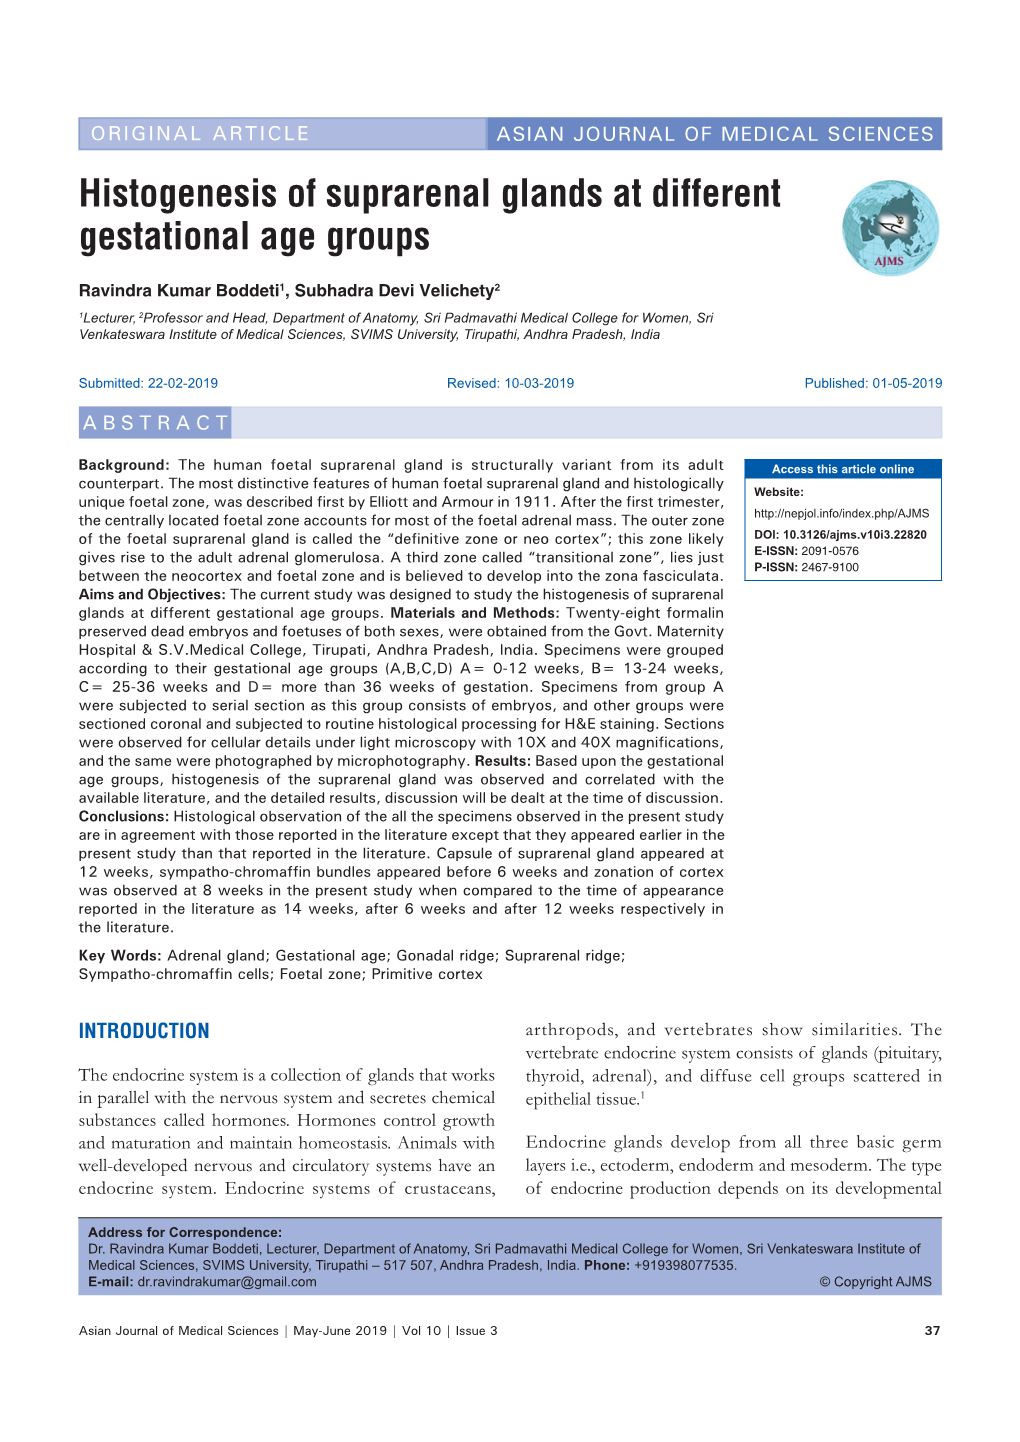 Histogenesis of Suprarenal Glands at Different Gestational Age Groups